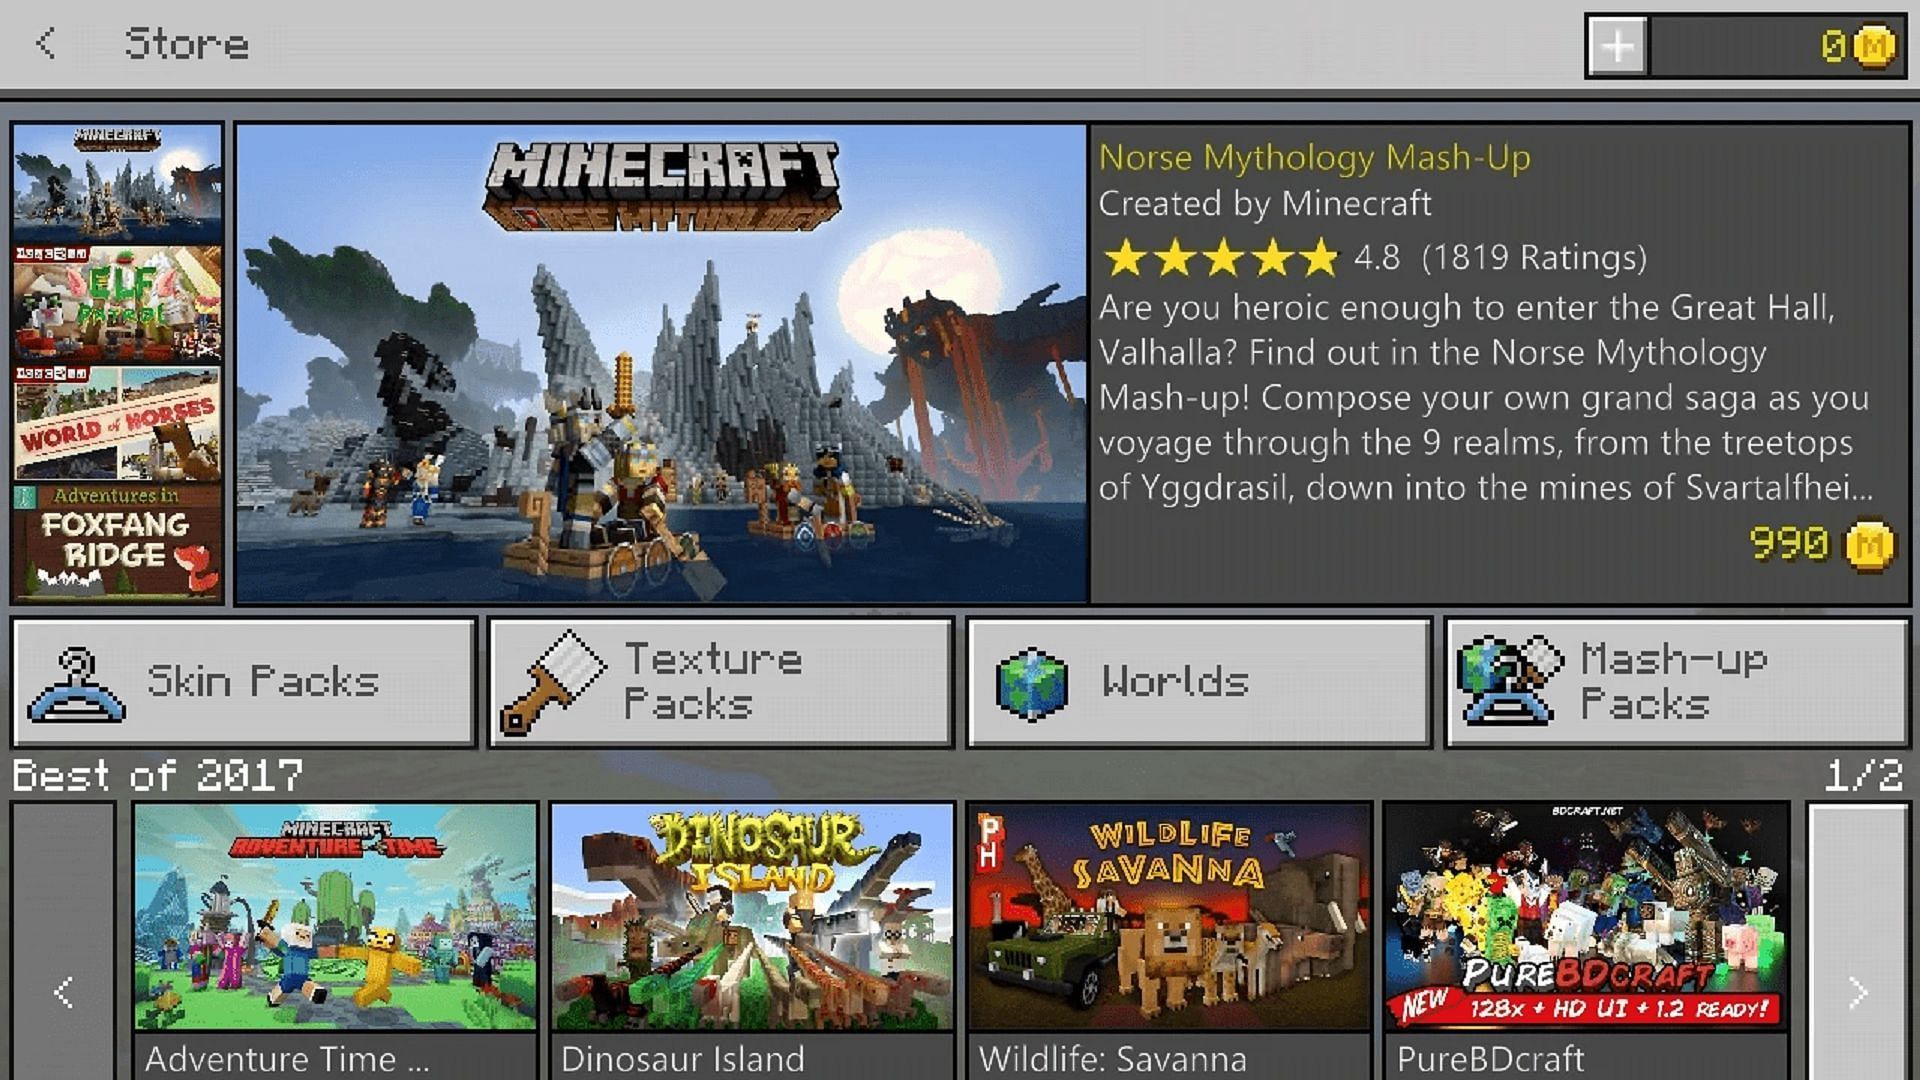 Products by Minecraft - Minecraft Marketplace (via bedrockexplorer